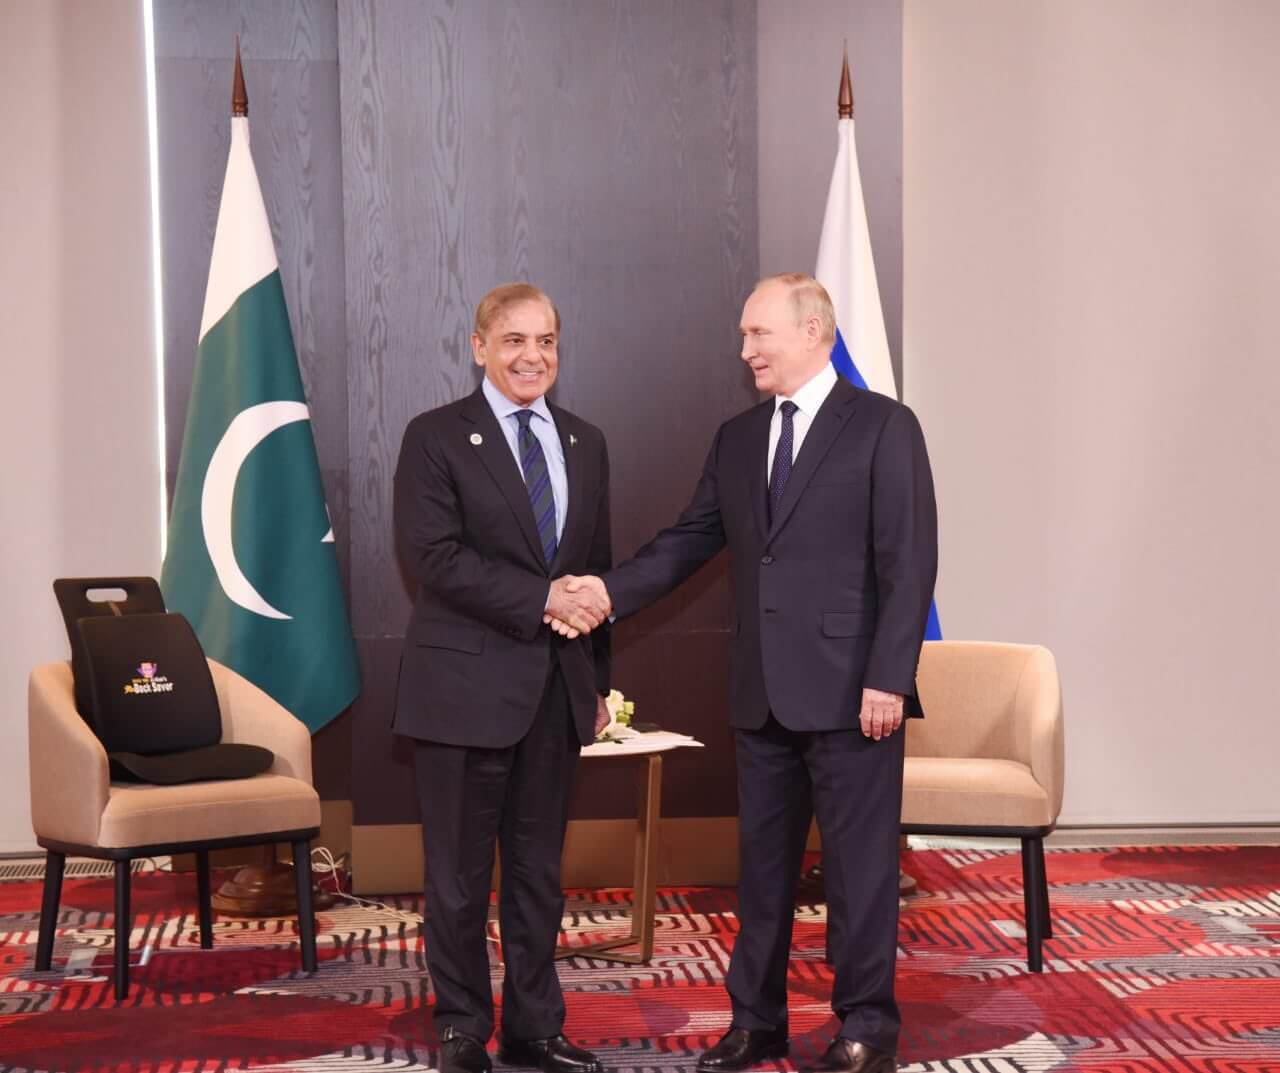 Putin Calls Pakistan a ‘Priority Partner’ as Sharif Looks to Recalibrate Ties